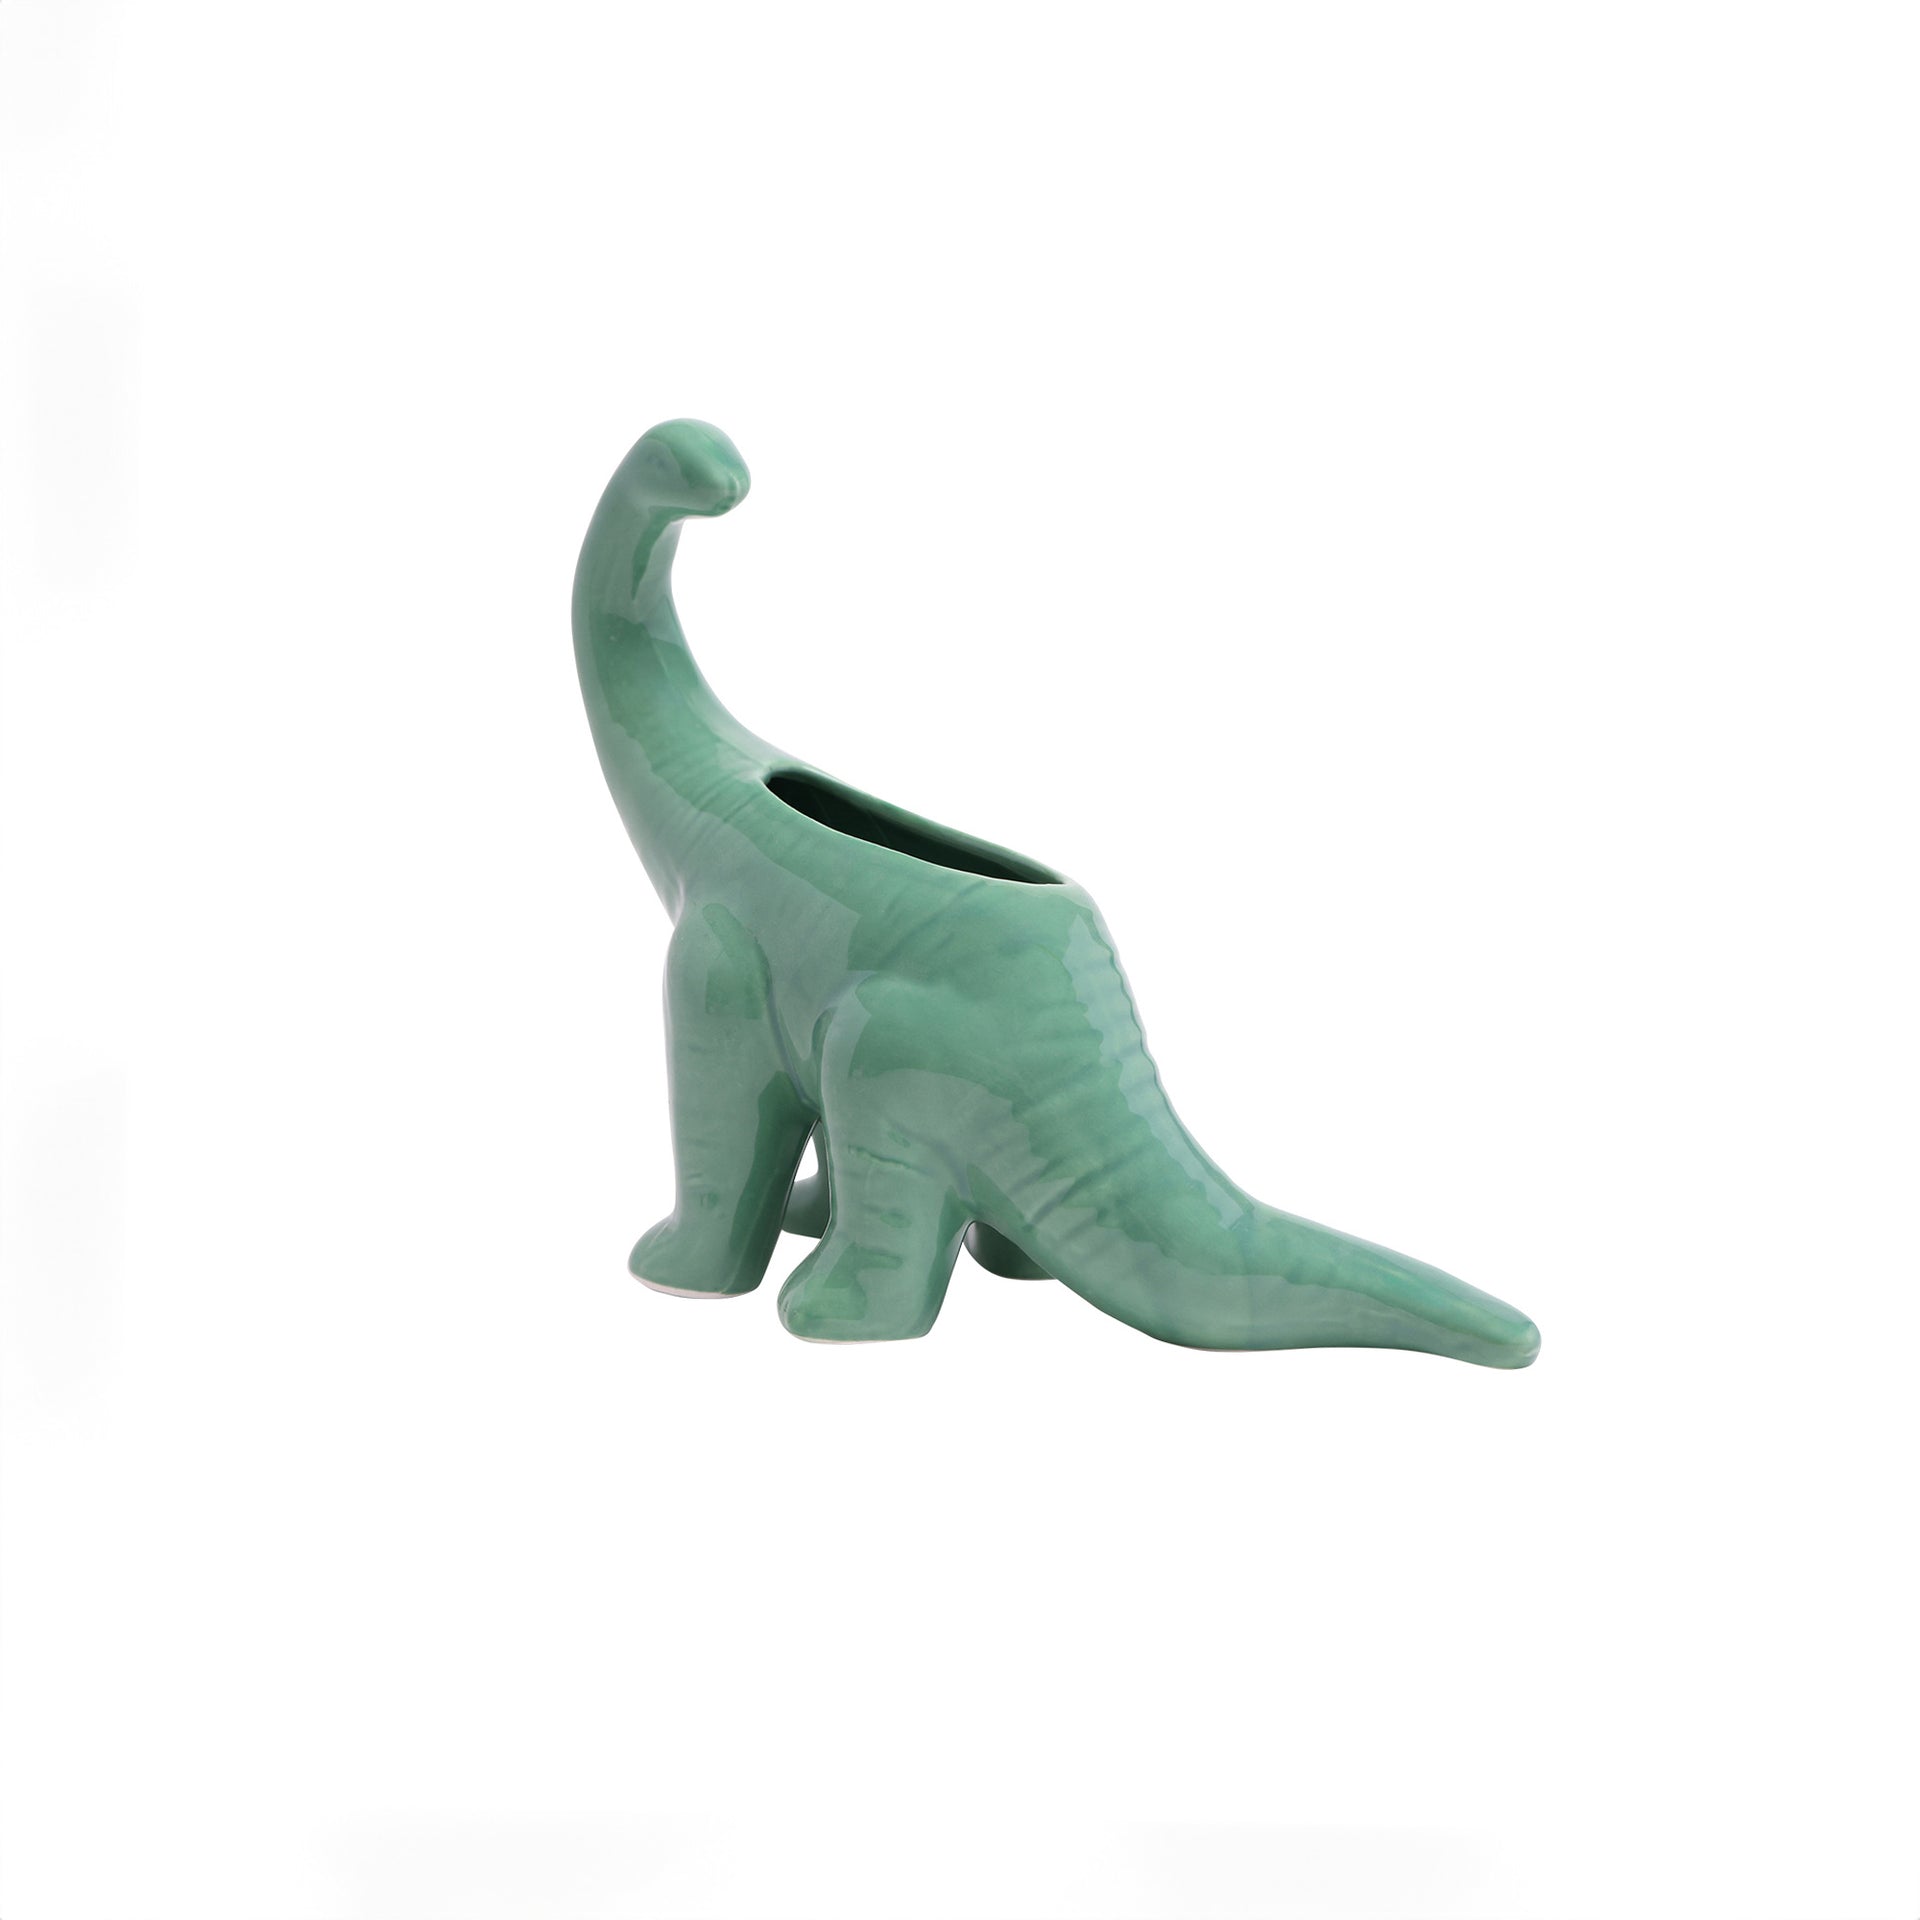 Brontosaurus Planter: Granite Green - Chrysler Museum Shop